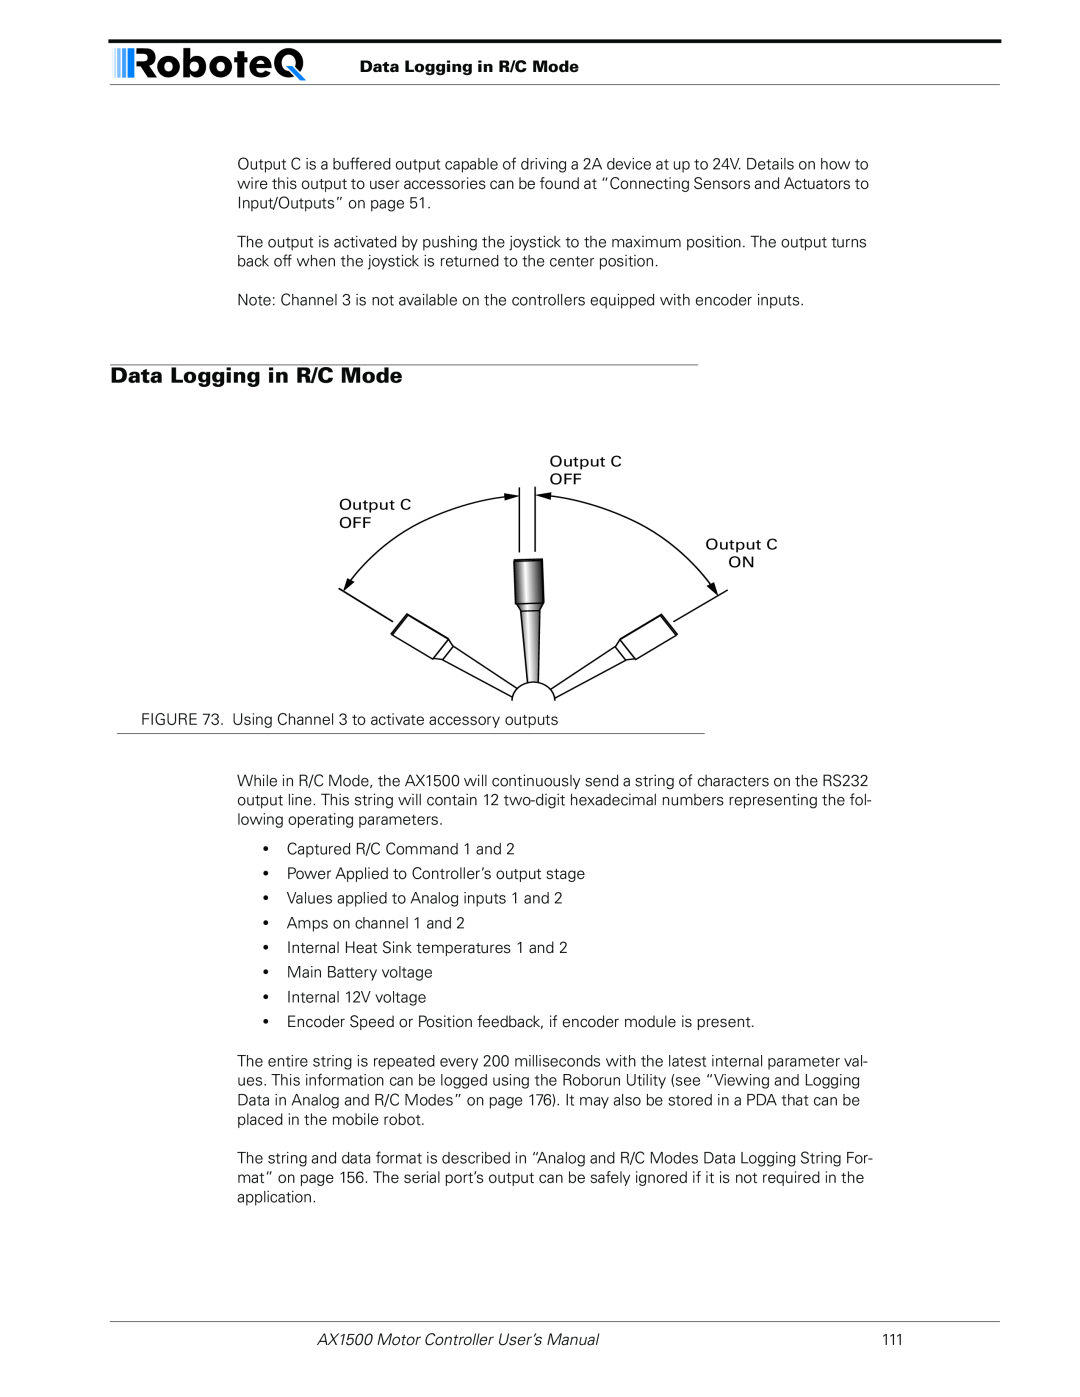 RoboteQ AX2550 user manual Data Logging in R/C Mode, AX1500 Motor Controller User’s Manual 